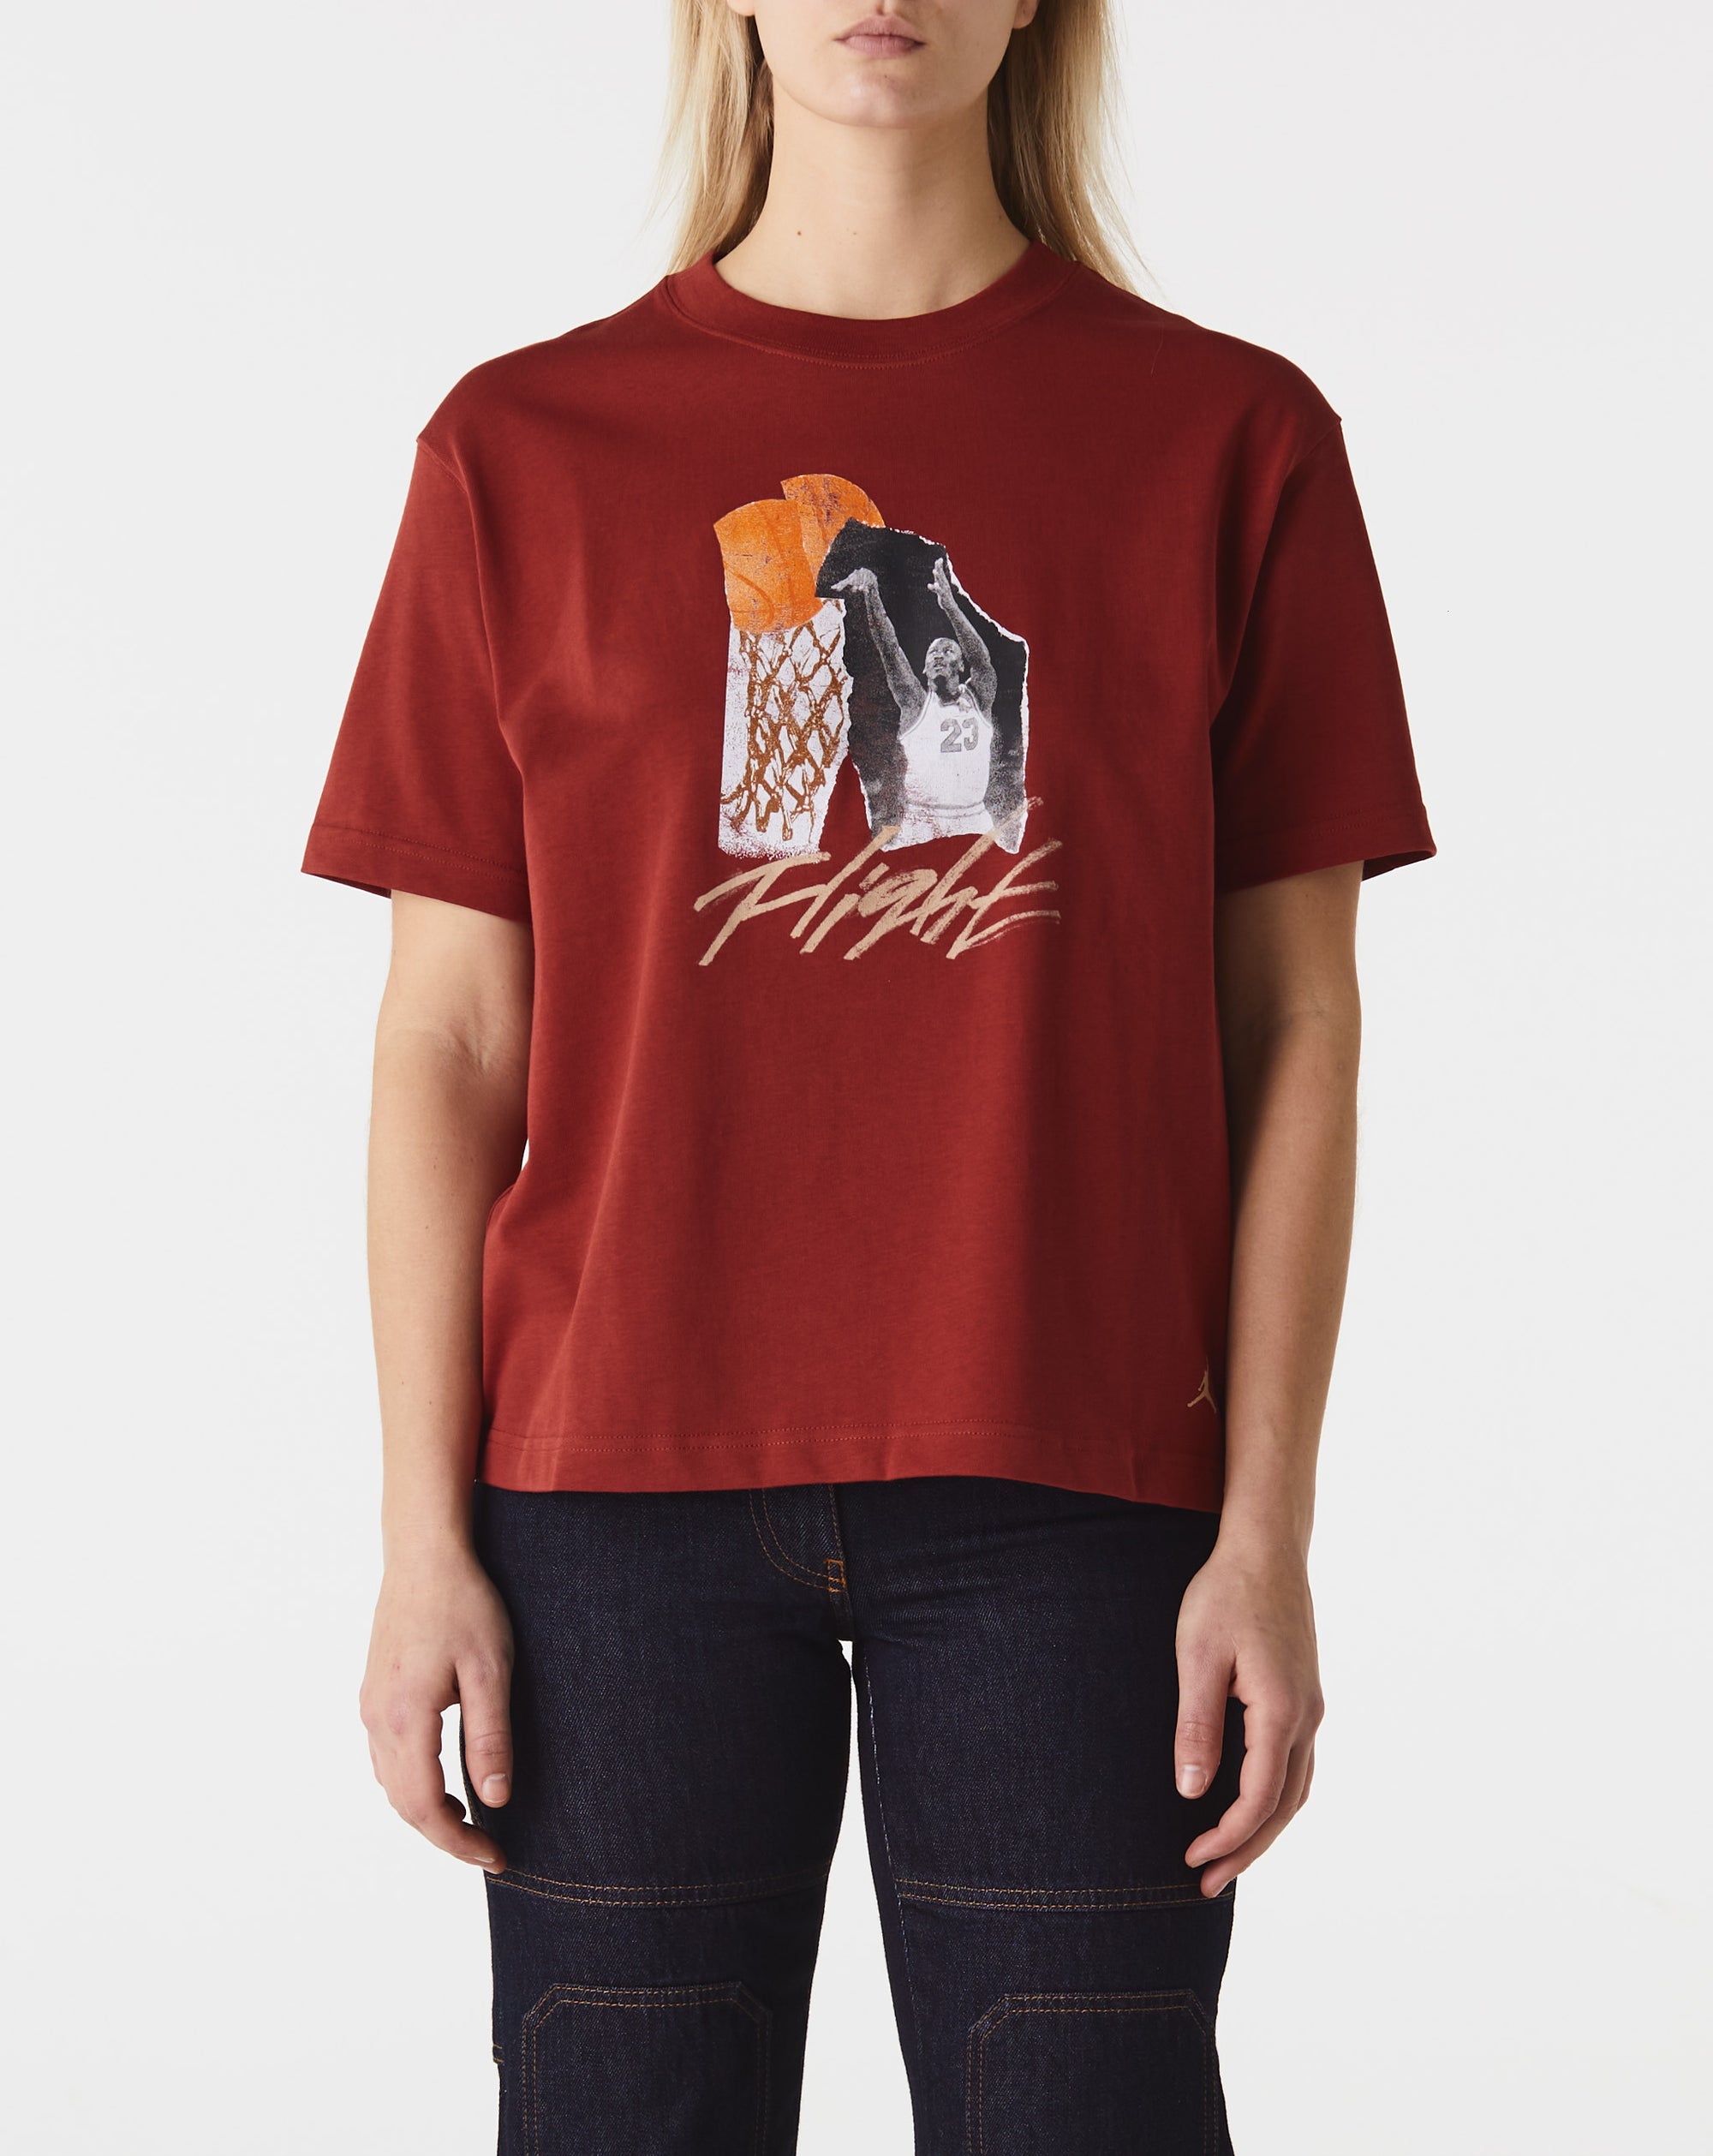 Air Jordan Women's Collage Girlfriend T-Shirt - Rule of Next Apparel